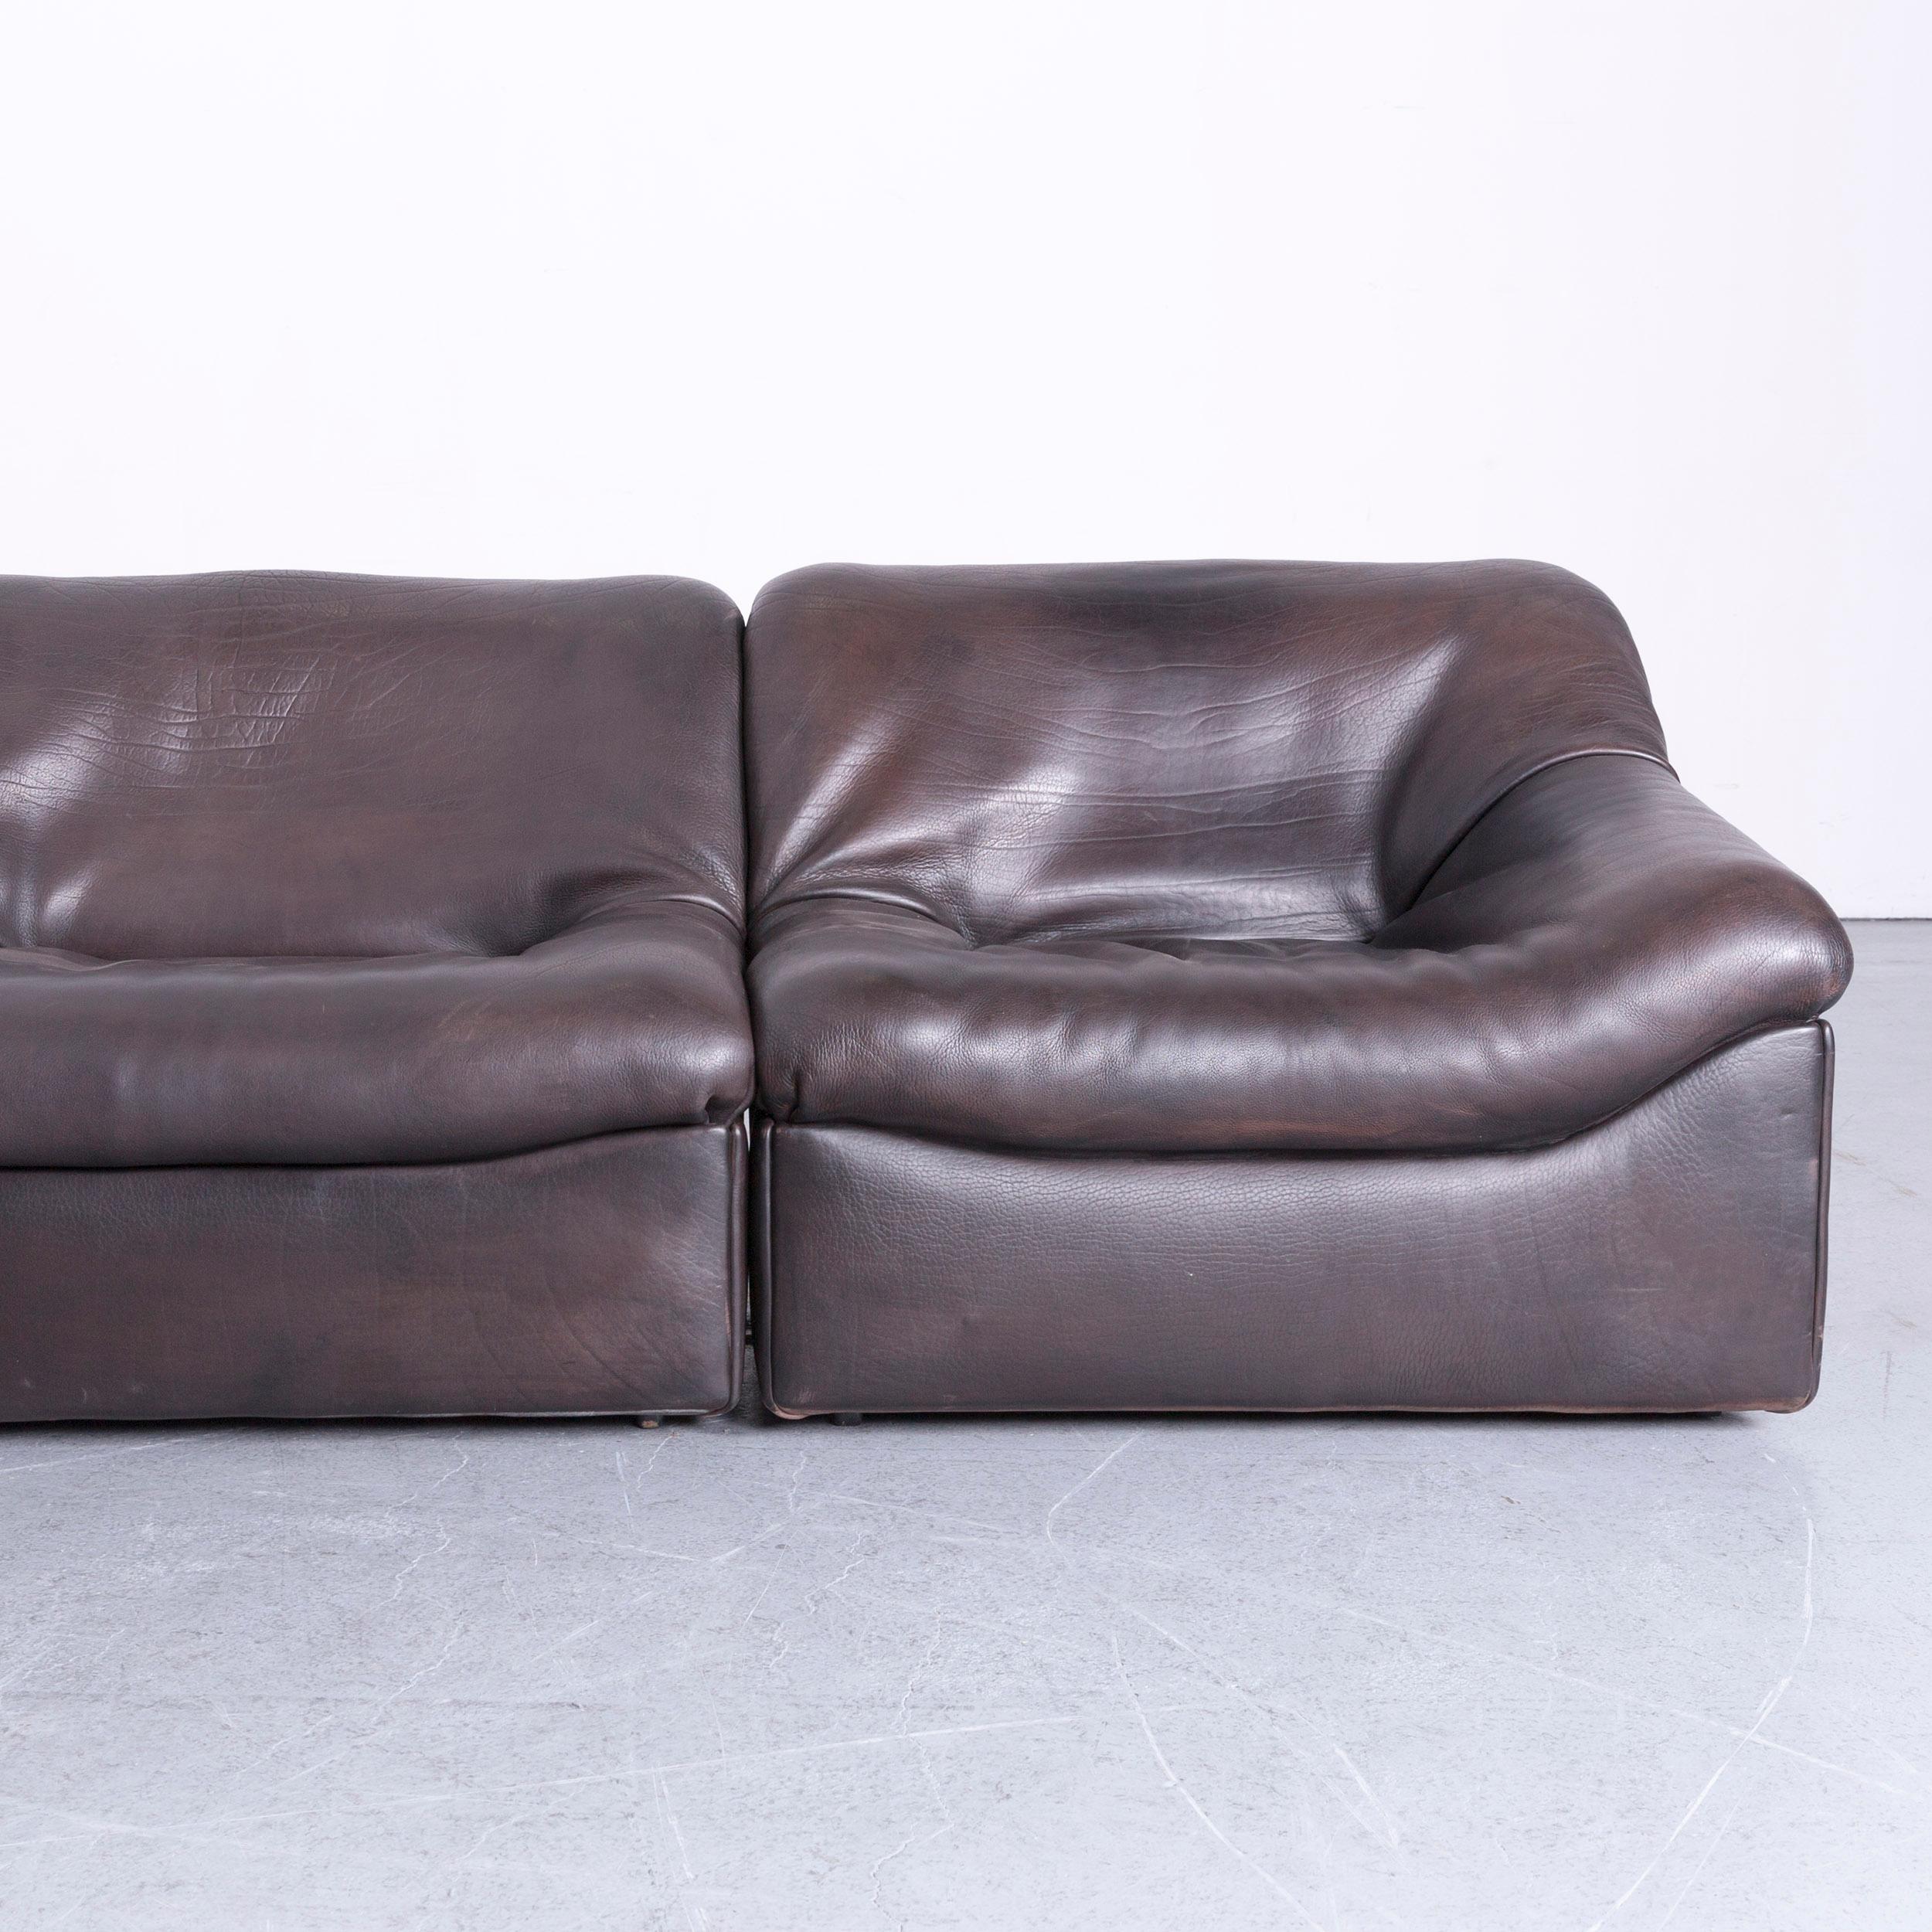 Swiss De Sede DS 46 Designer Leather Corner Sofa Brown Modular Function Couch 